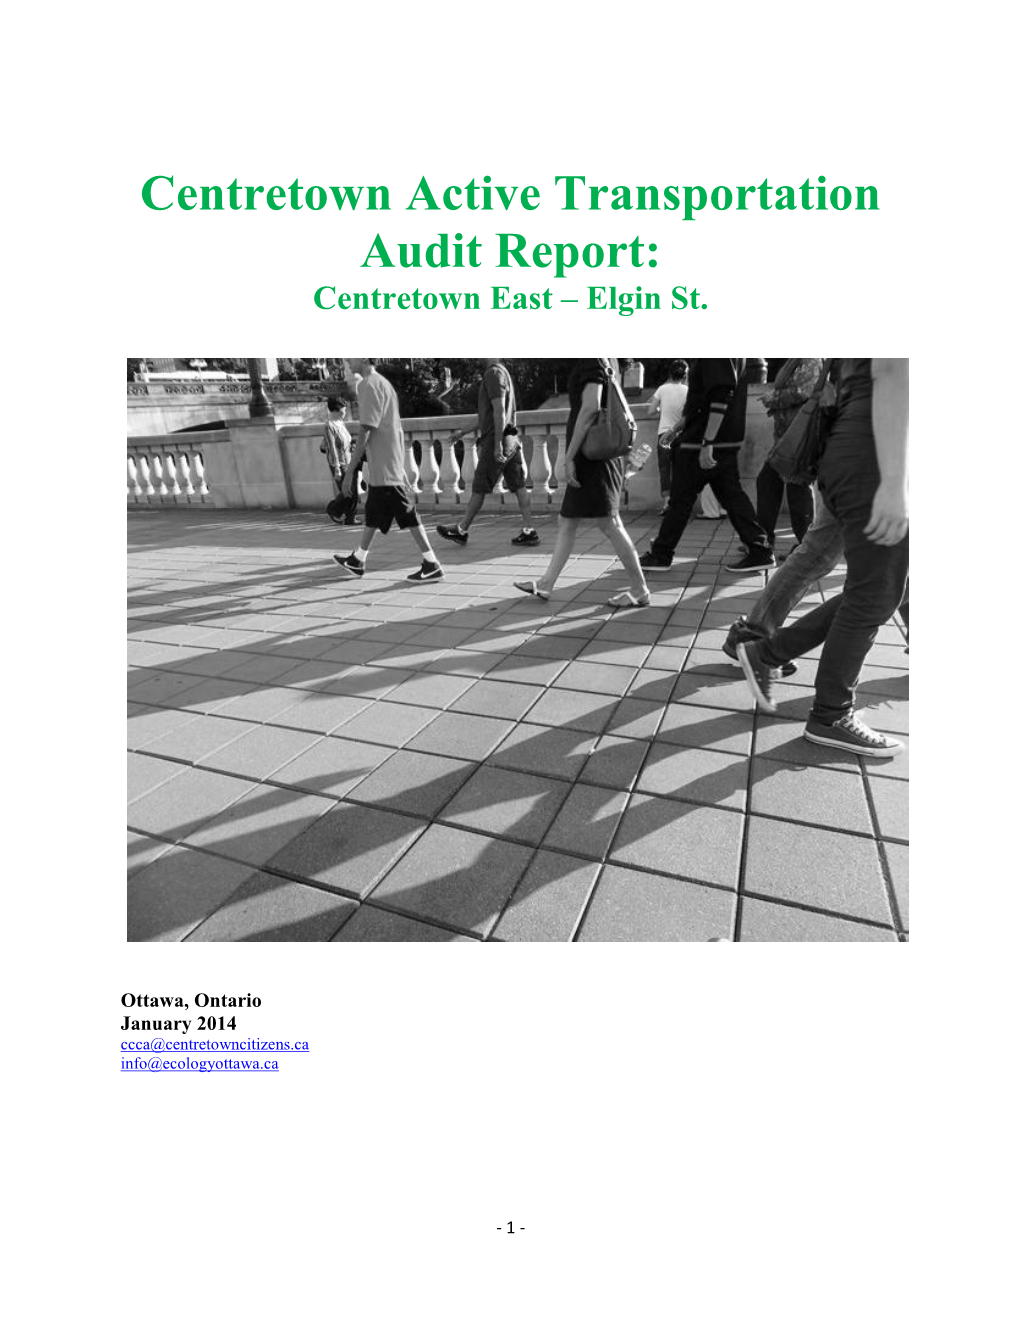 Centretown Active Transportation Audit Report: Centretown East – Elgin St